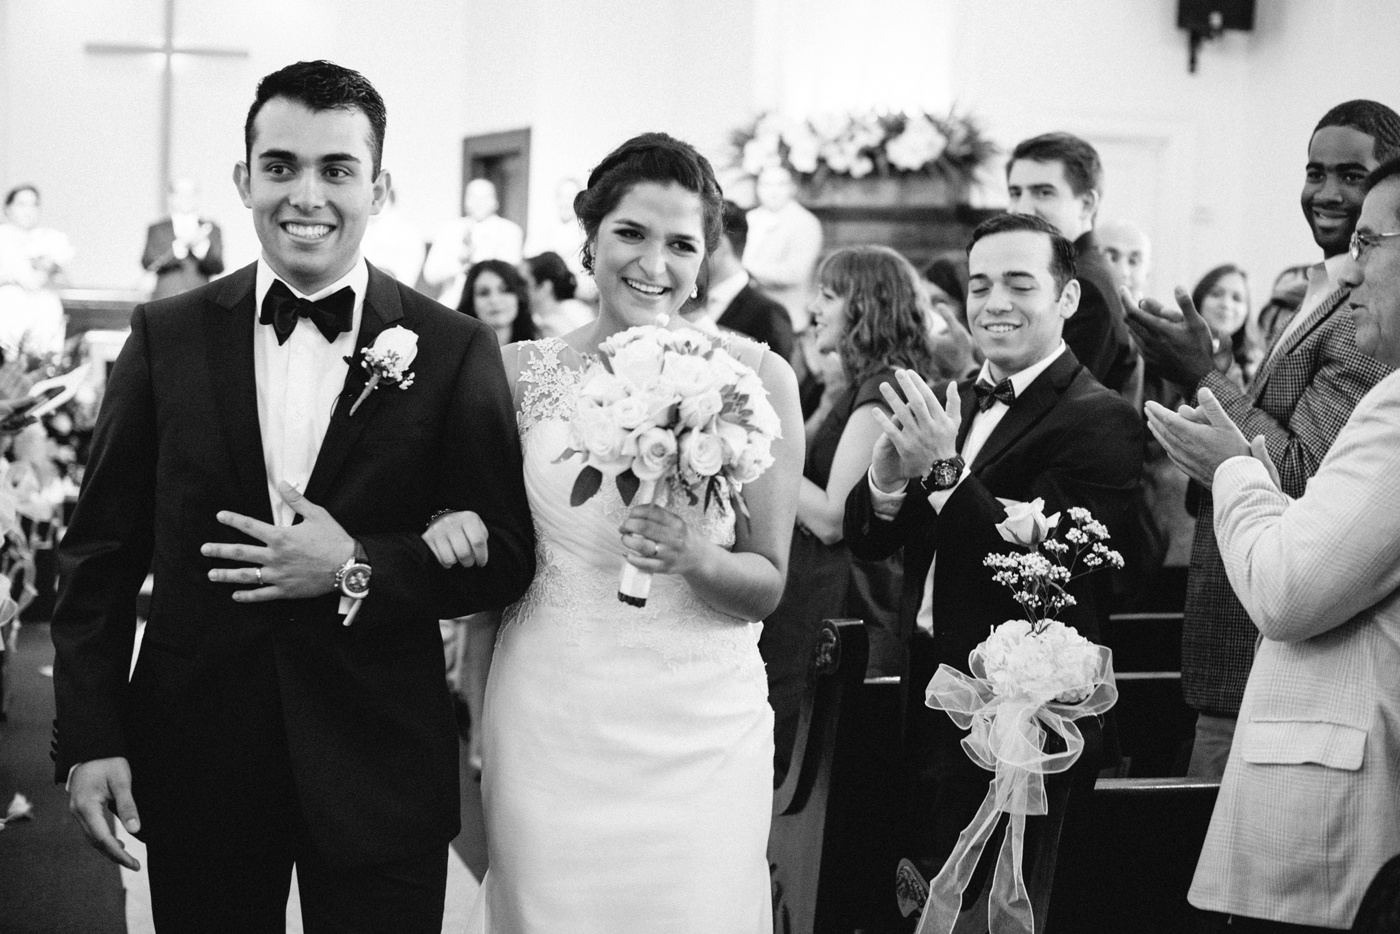 43 - Daniela + Franco - Celebrate at Snug Harbor Wedding - Staten Island New York Wedding Photographer - Alison Dunn Photography photo